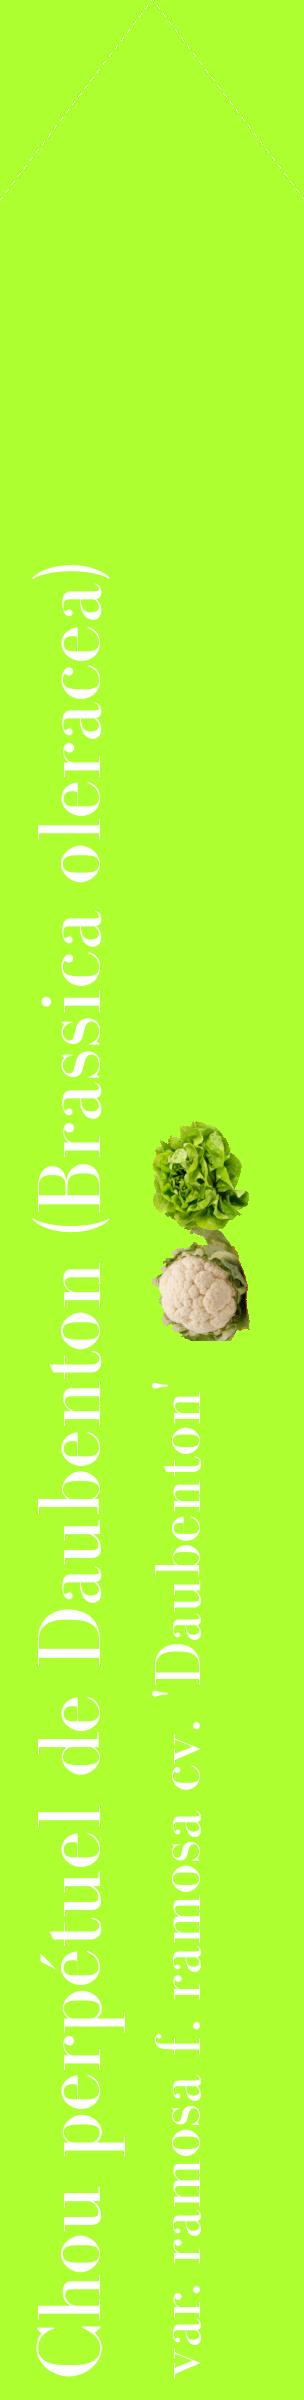 Étiquette de : Brassica oleracea var. ramosa f. ramosa cv. 'Daubenton' - format c - style blanche17_simplebod avec comestibilité simplifiée